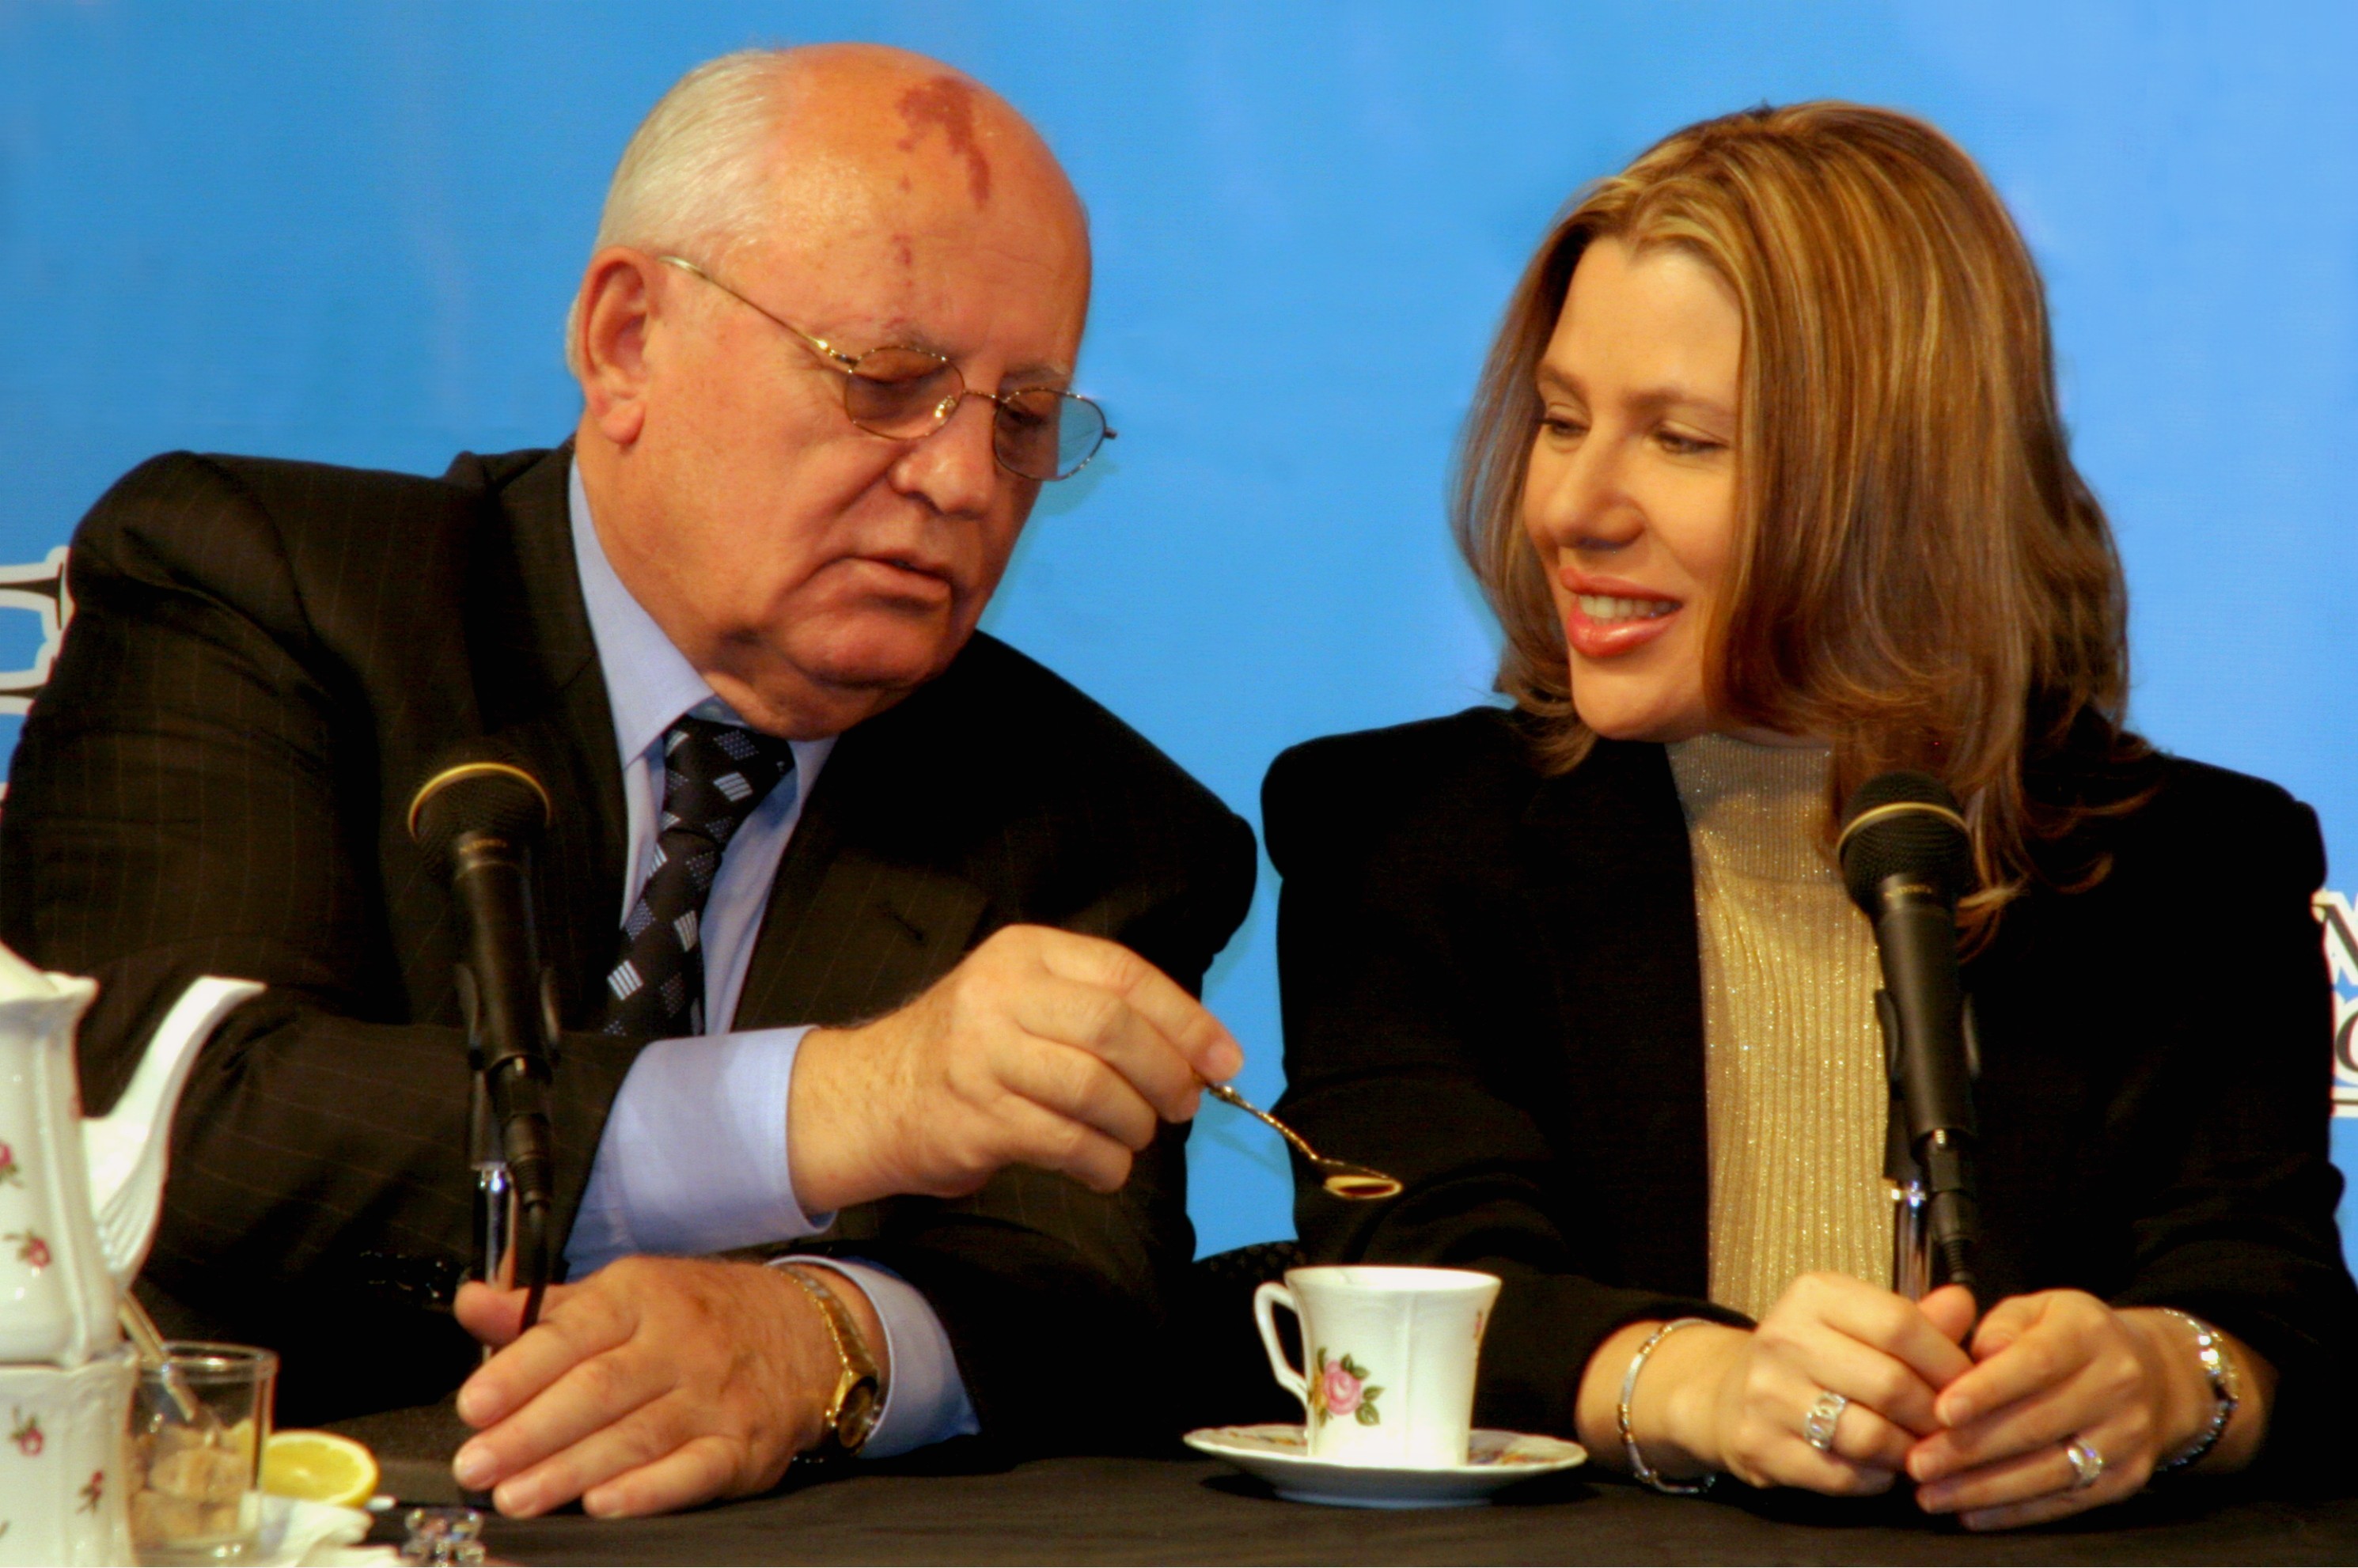 Susan Polgar and Mikhail Gorbachev - Chess for Peace project